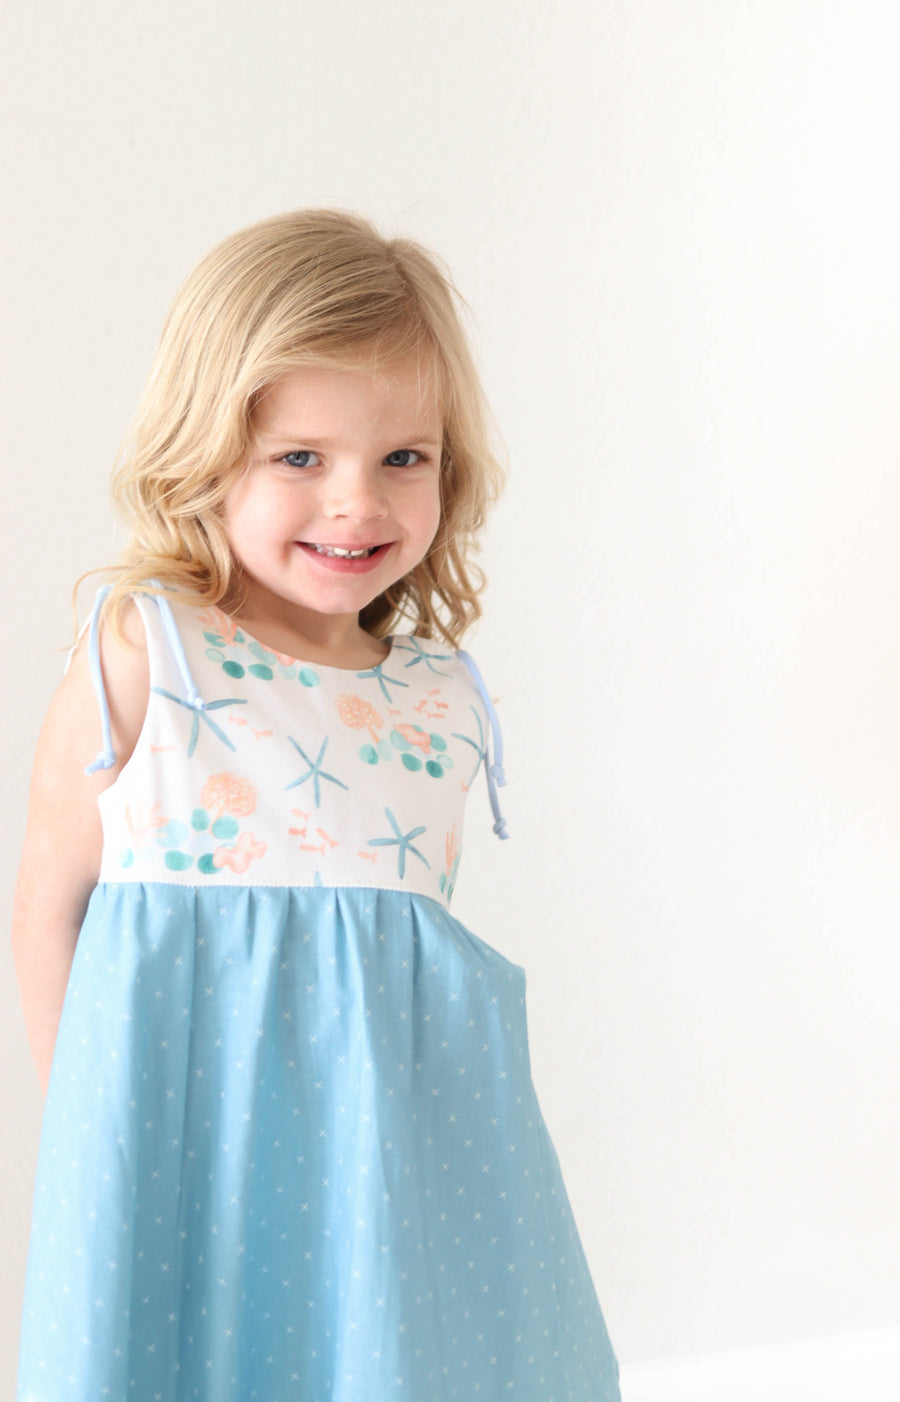 Girls Dress - Toddler Dress - Baby Girl Dress - Starfish Twirly Dress - Made in Hawaii